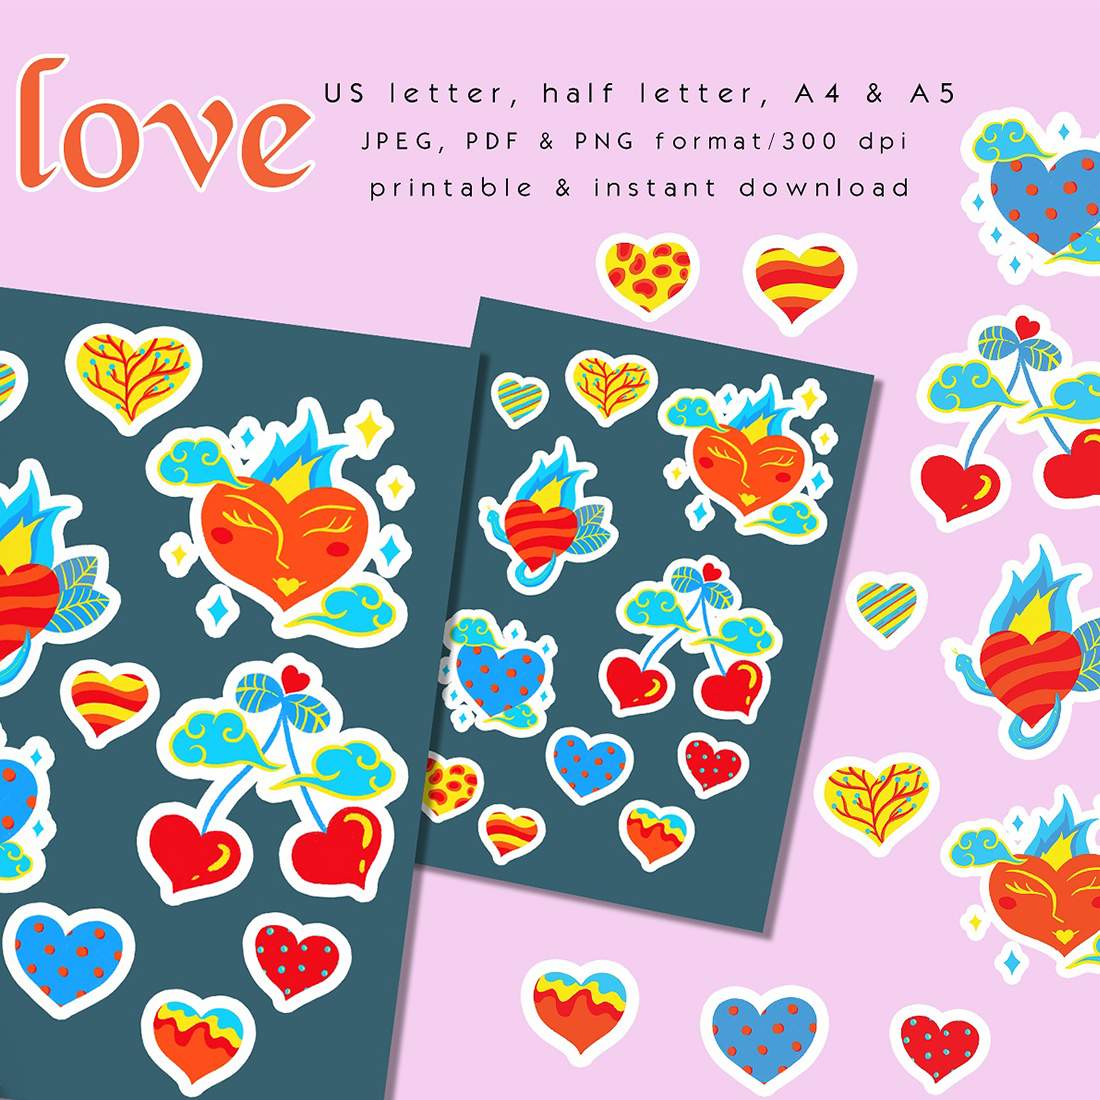 In LOVE Sticker Printable cover image.